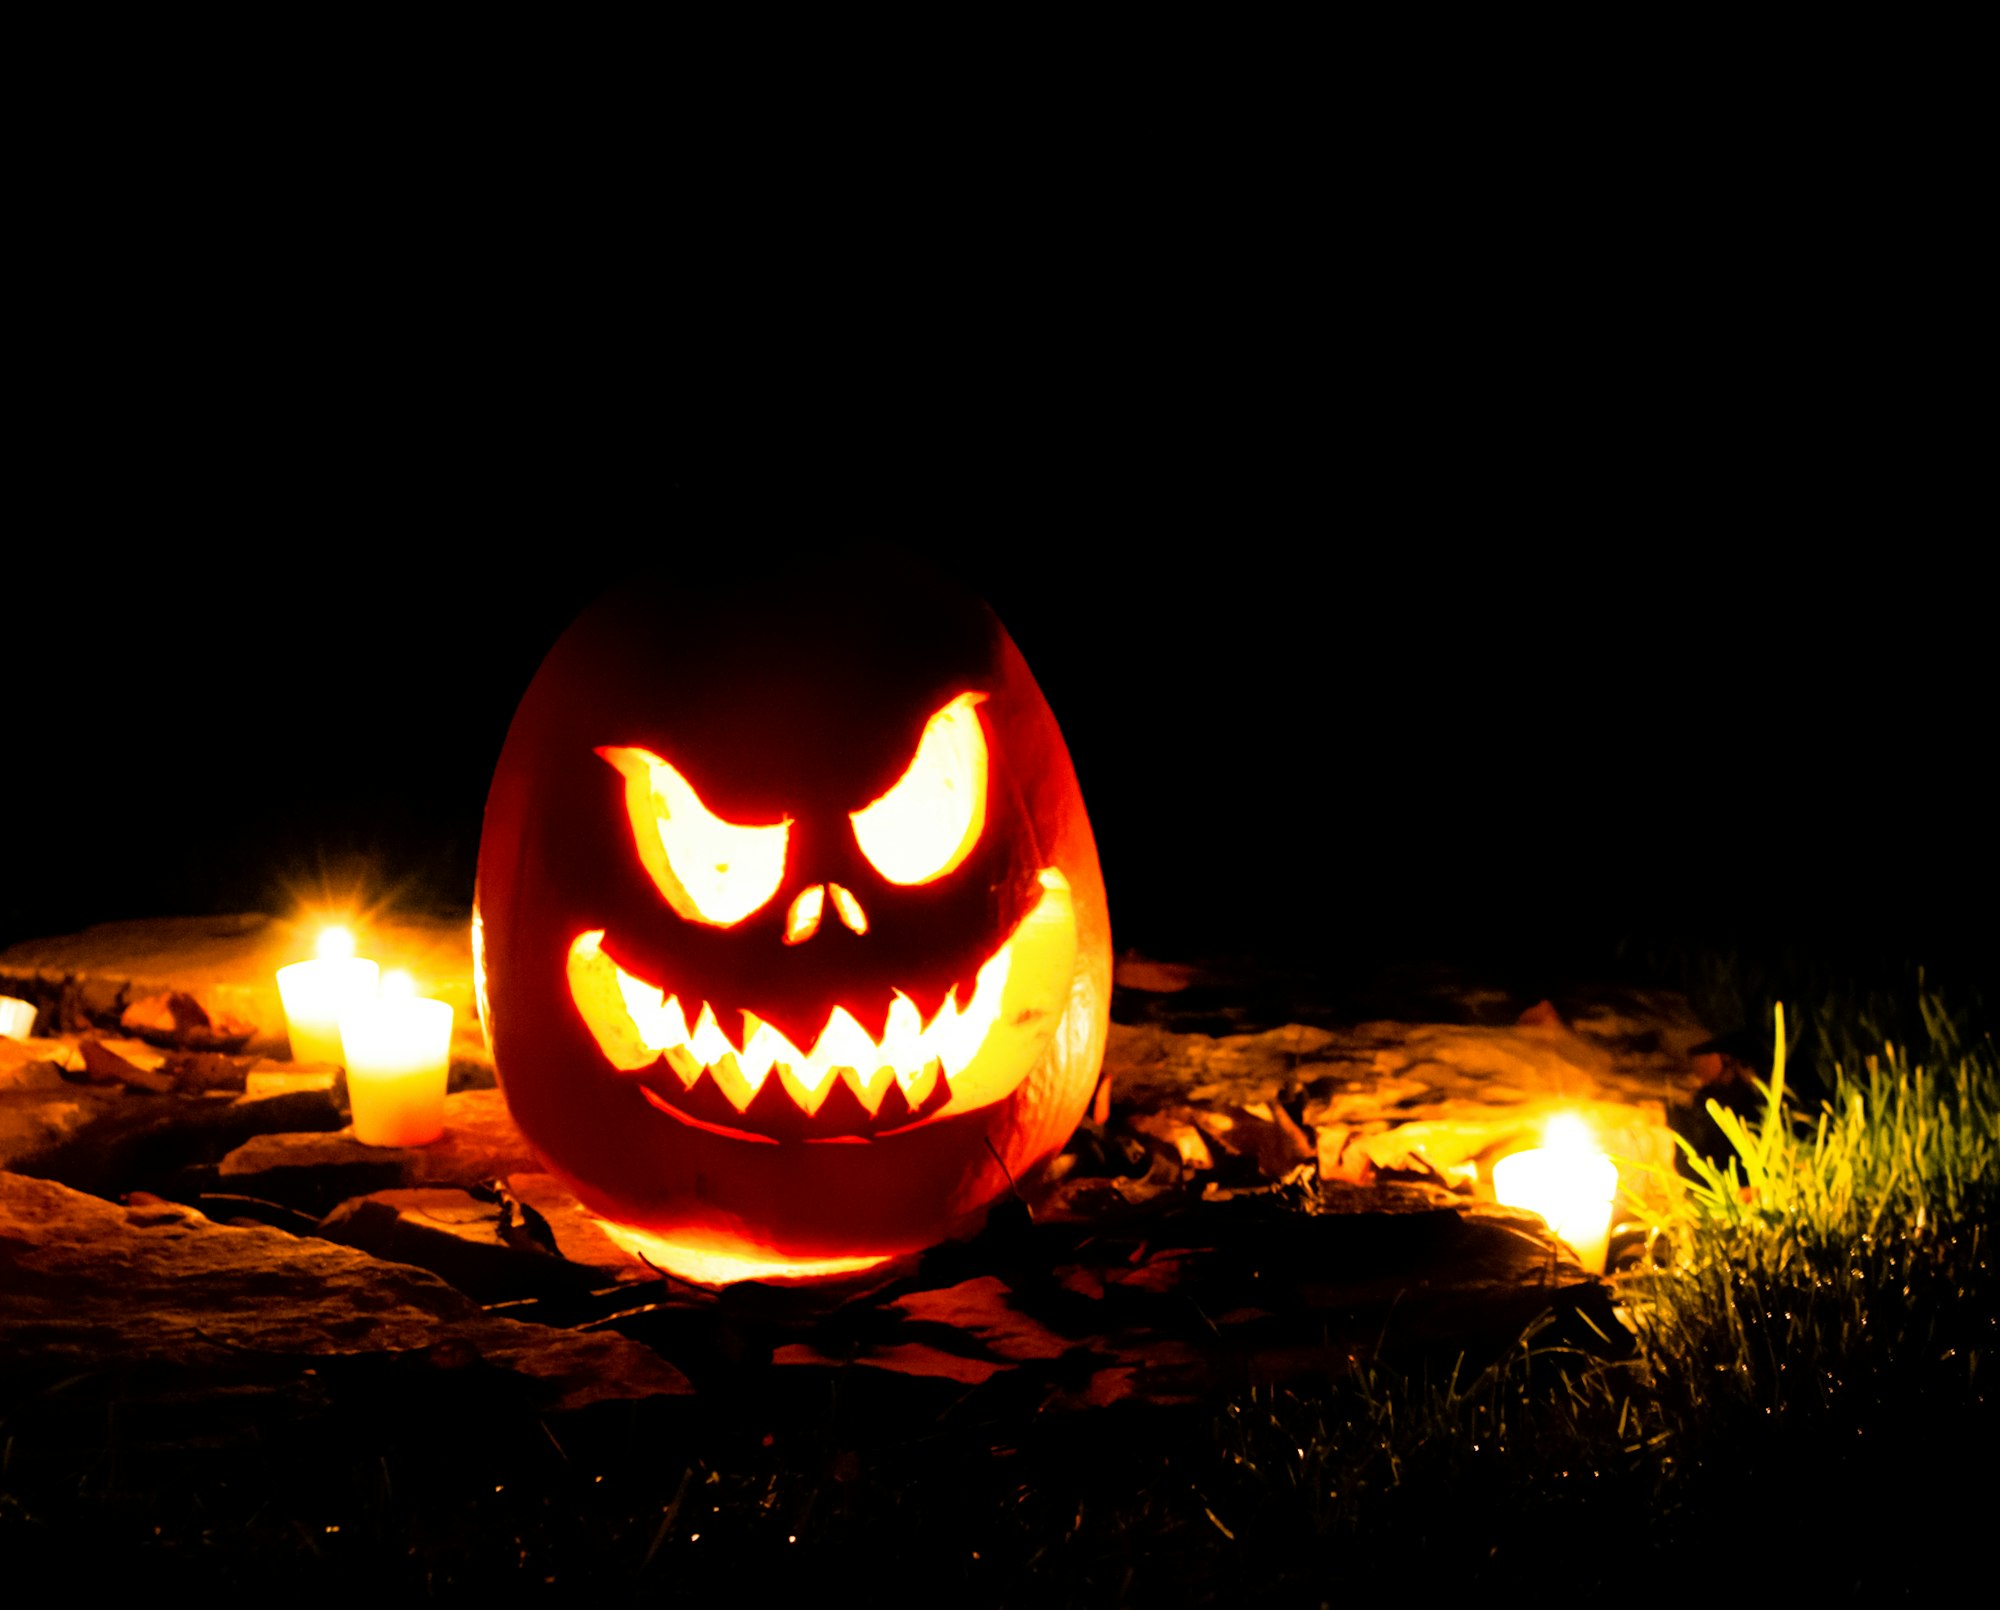 a spooky jack-o-lantern